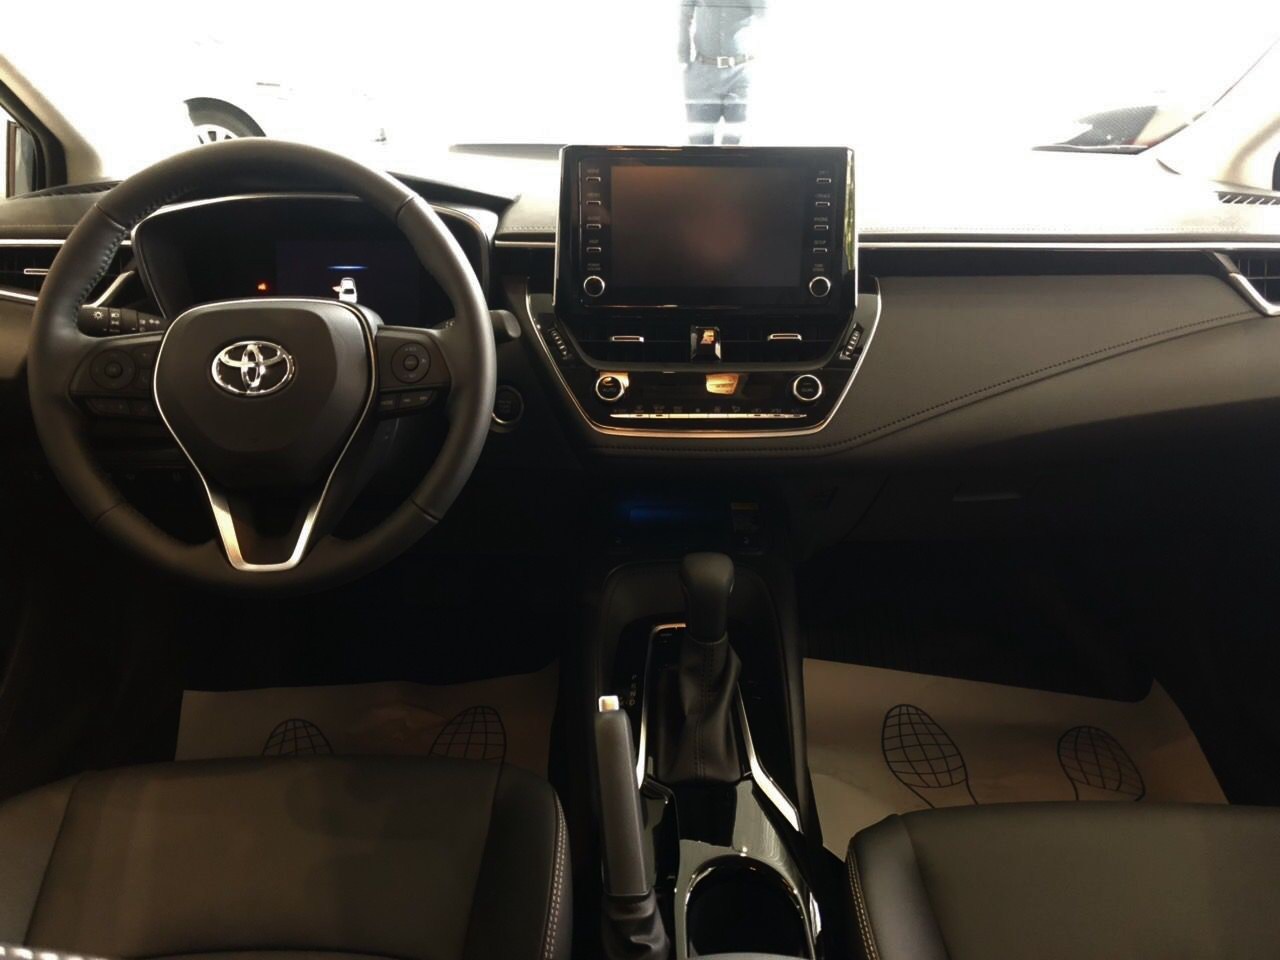 Toyota Corolla 2019 передняя панель